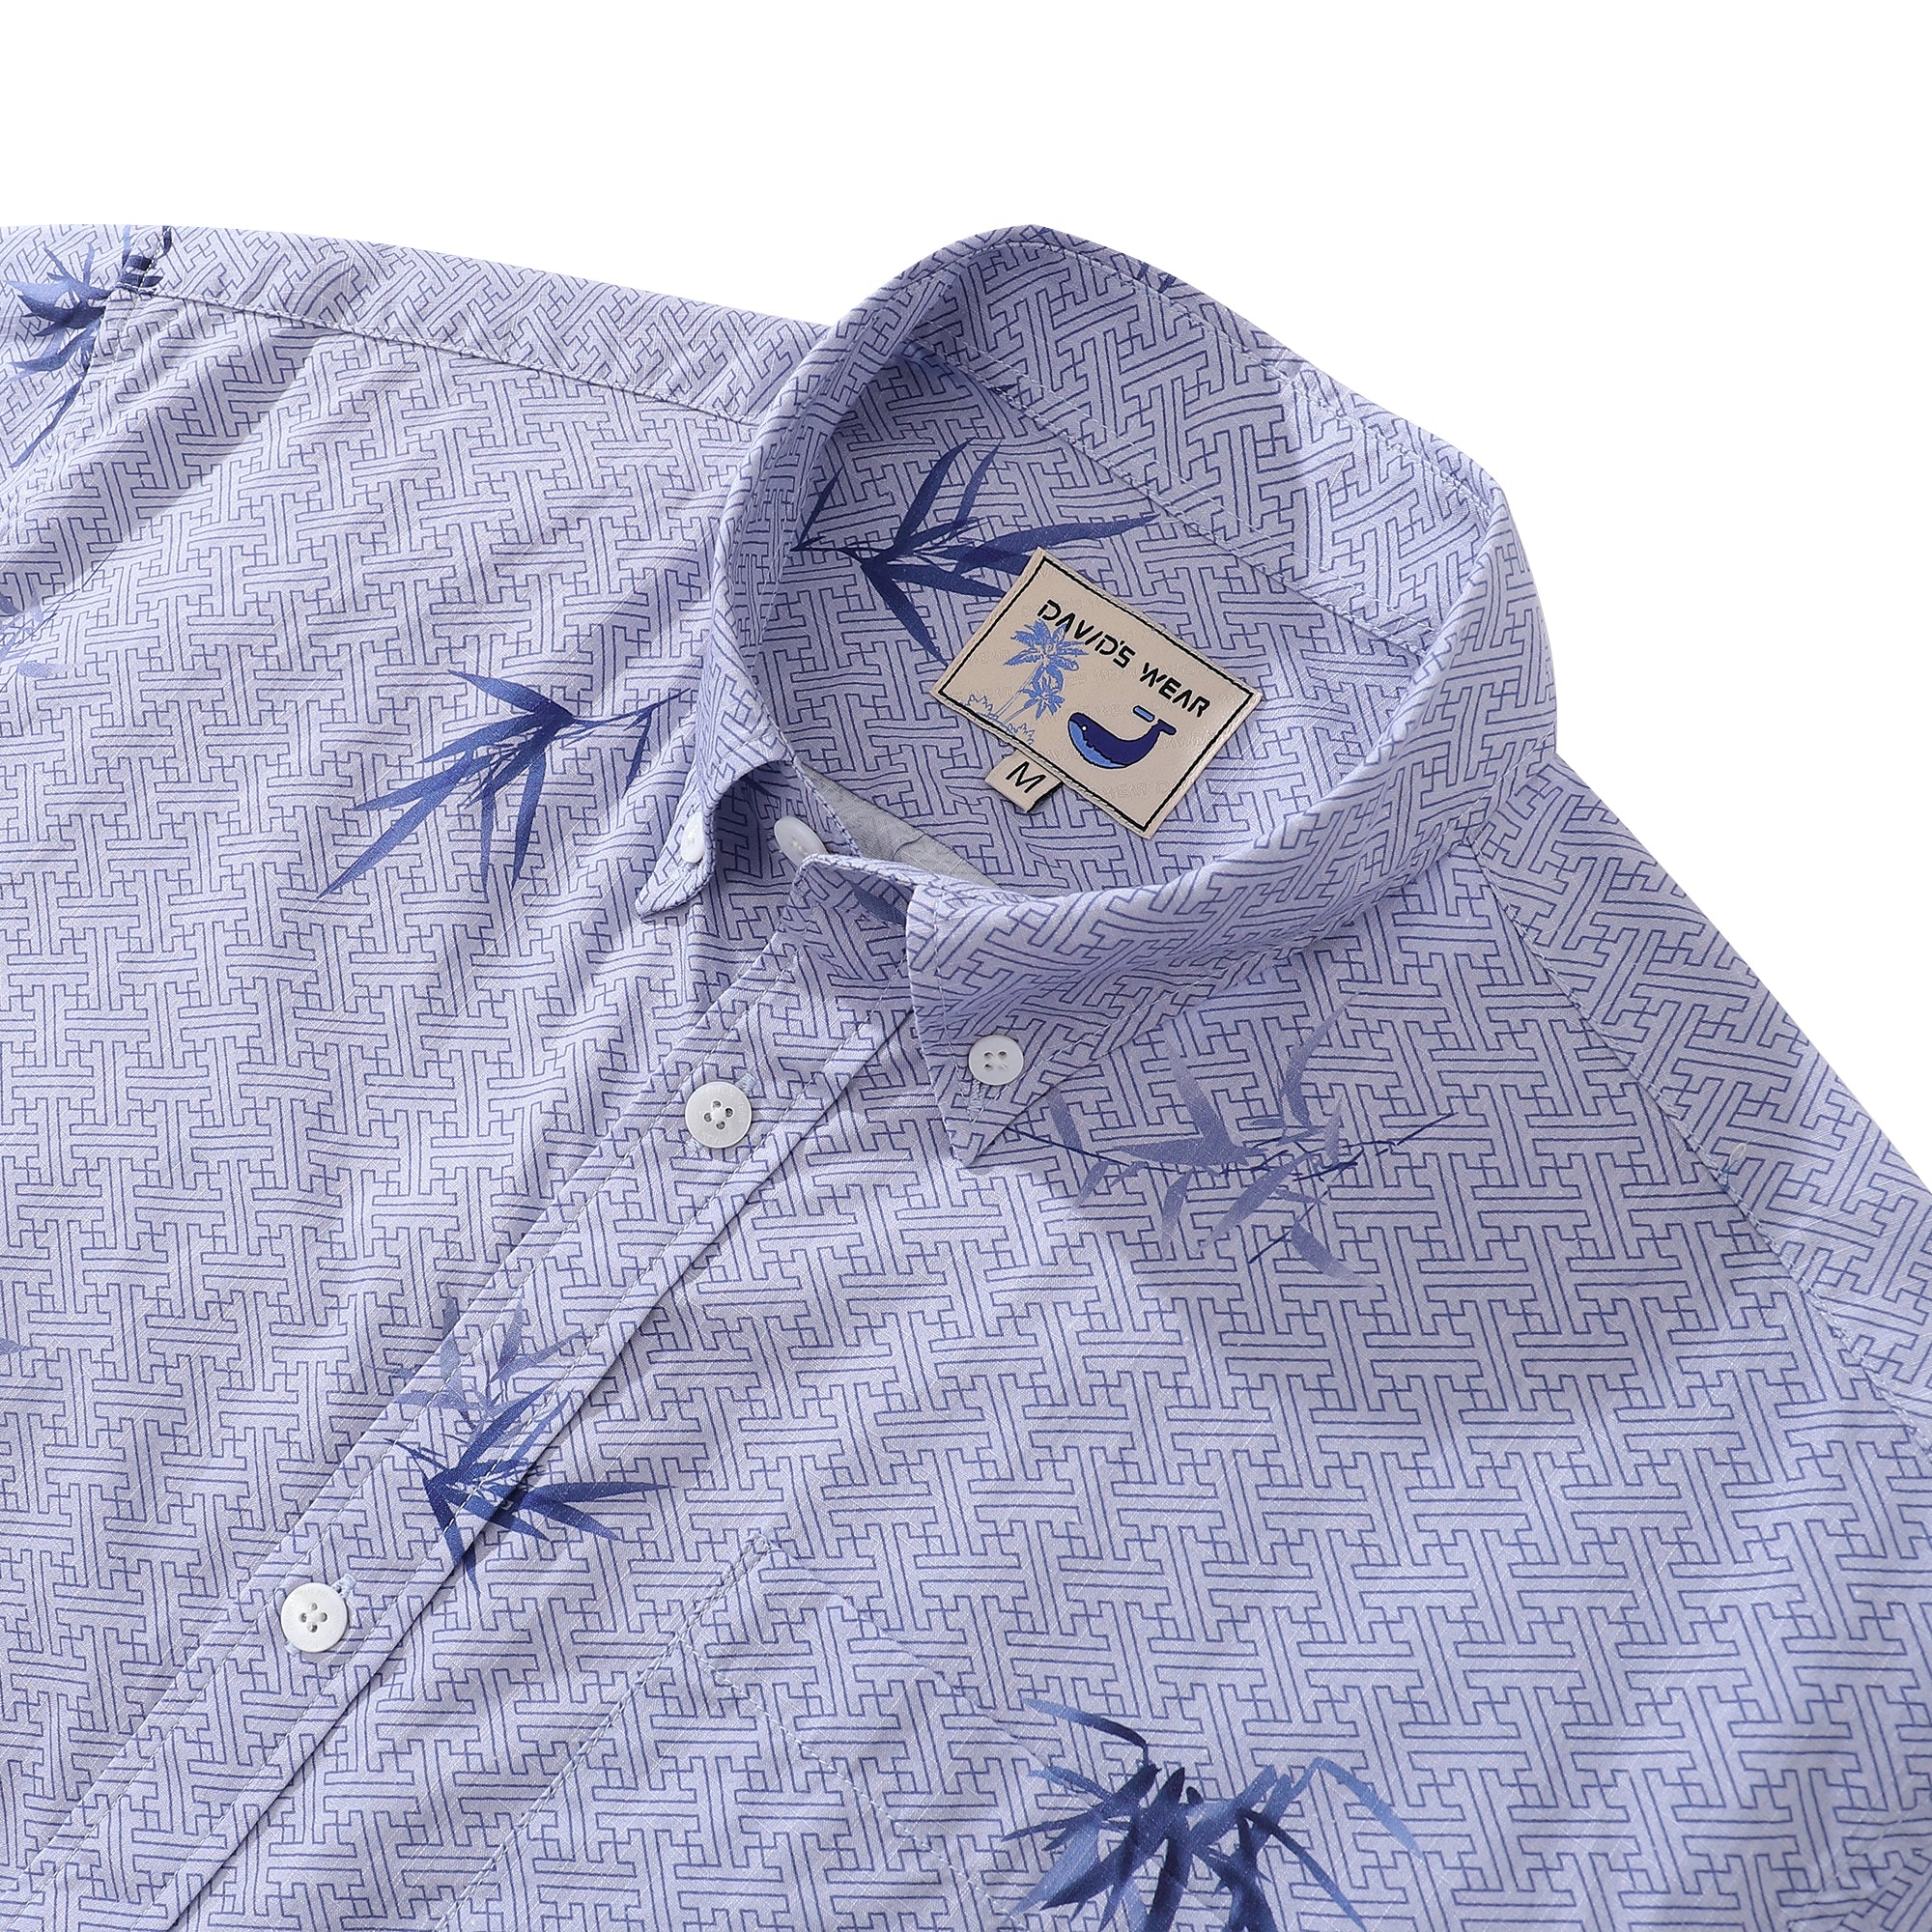 Hawaiian Shirts For Men Vintage Cotton Button Down Abundant Bamboo Ambiance Short Sleeve Aloha Shirt